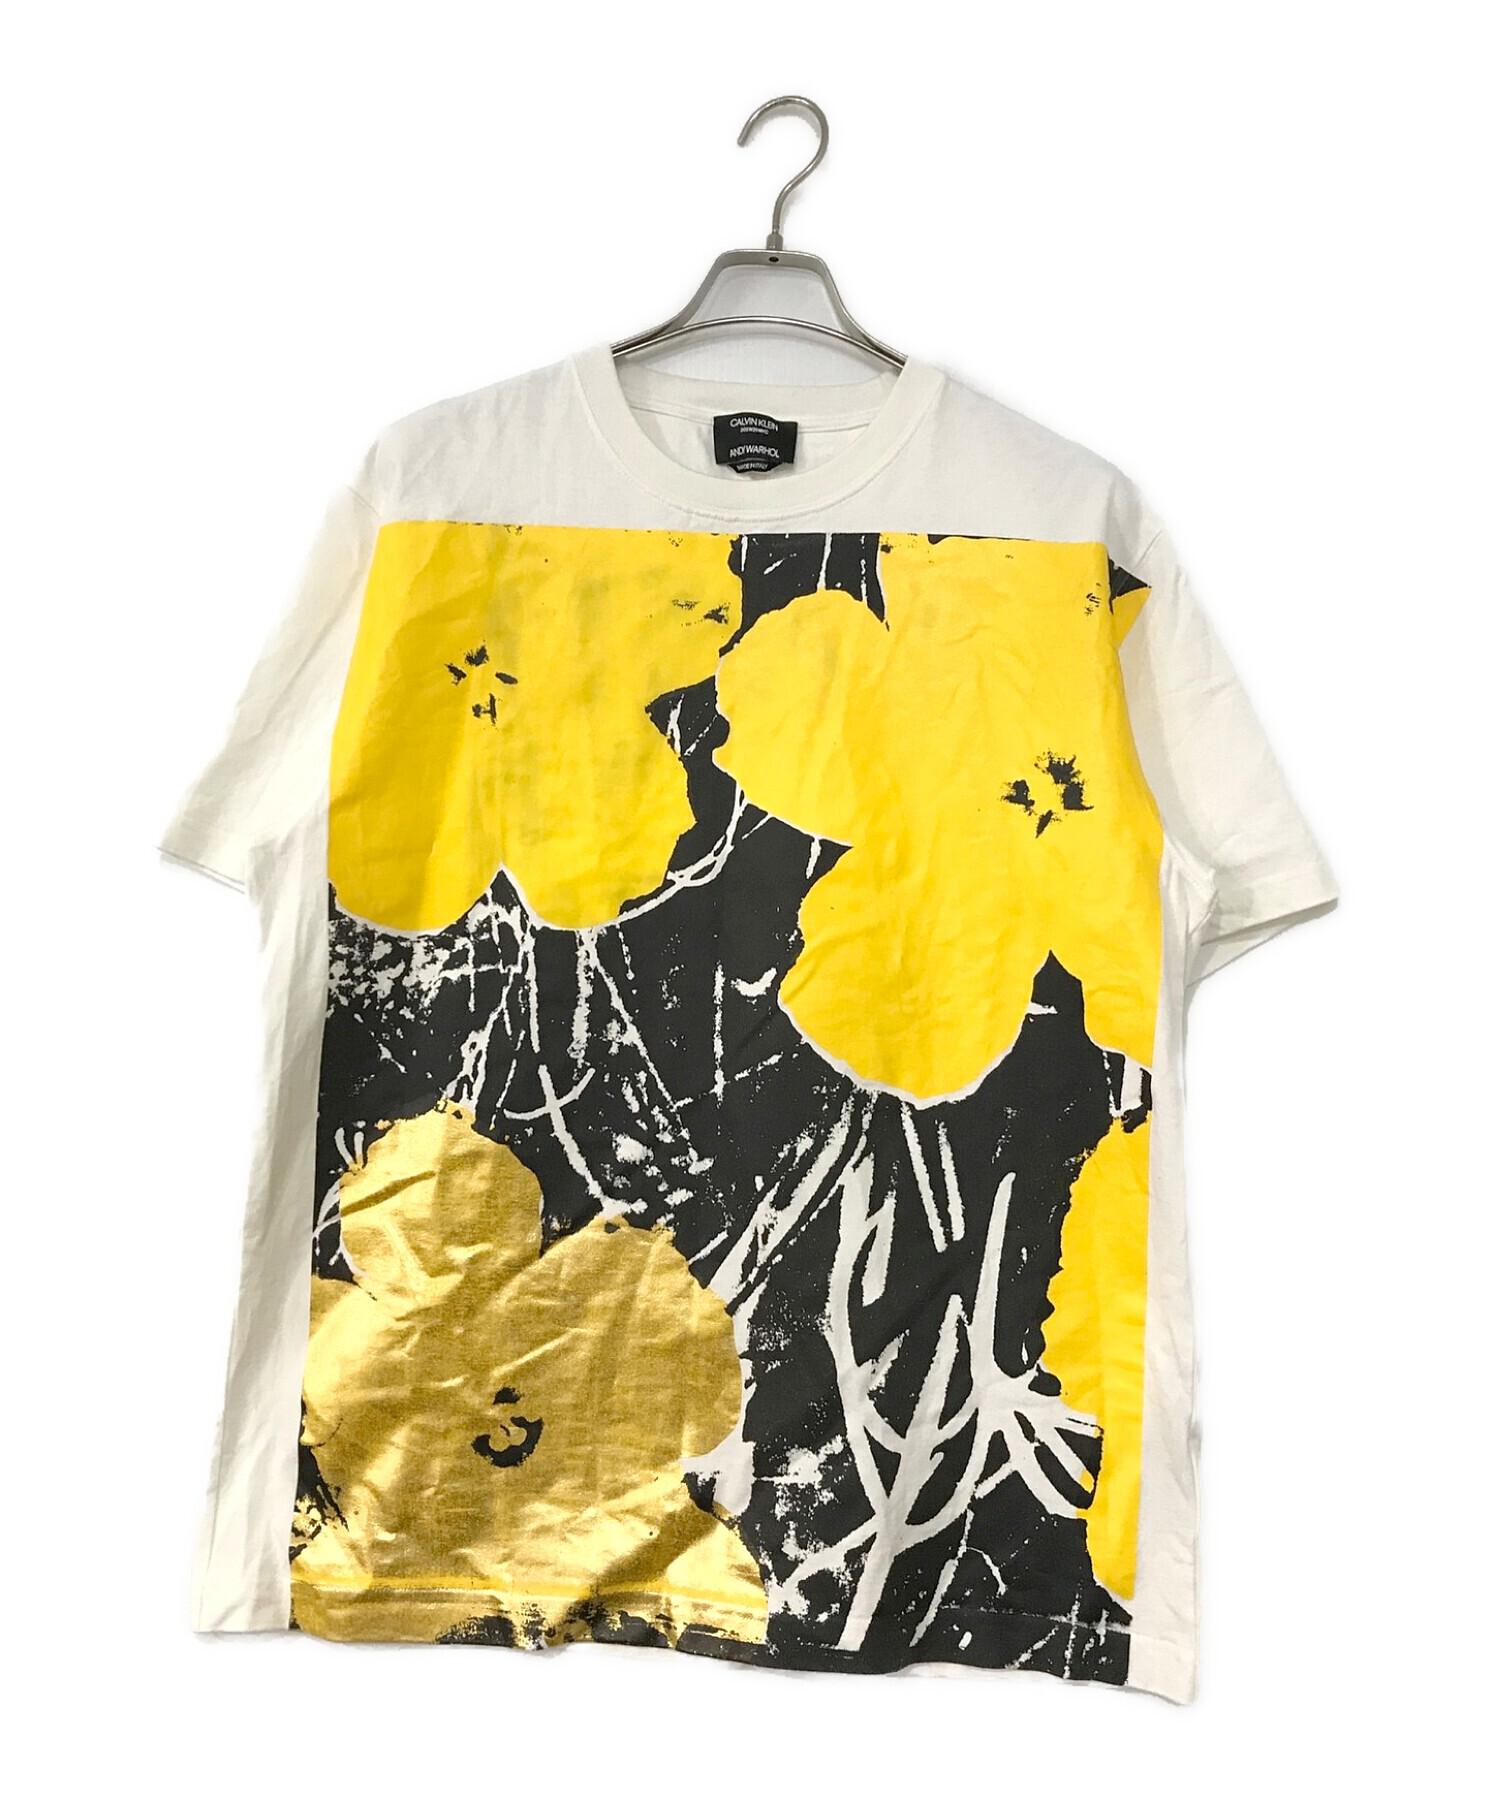 Andy Warhol 毛沢東Tシャツ - メンズファッション